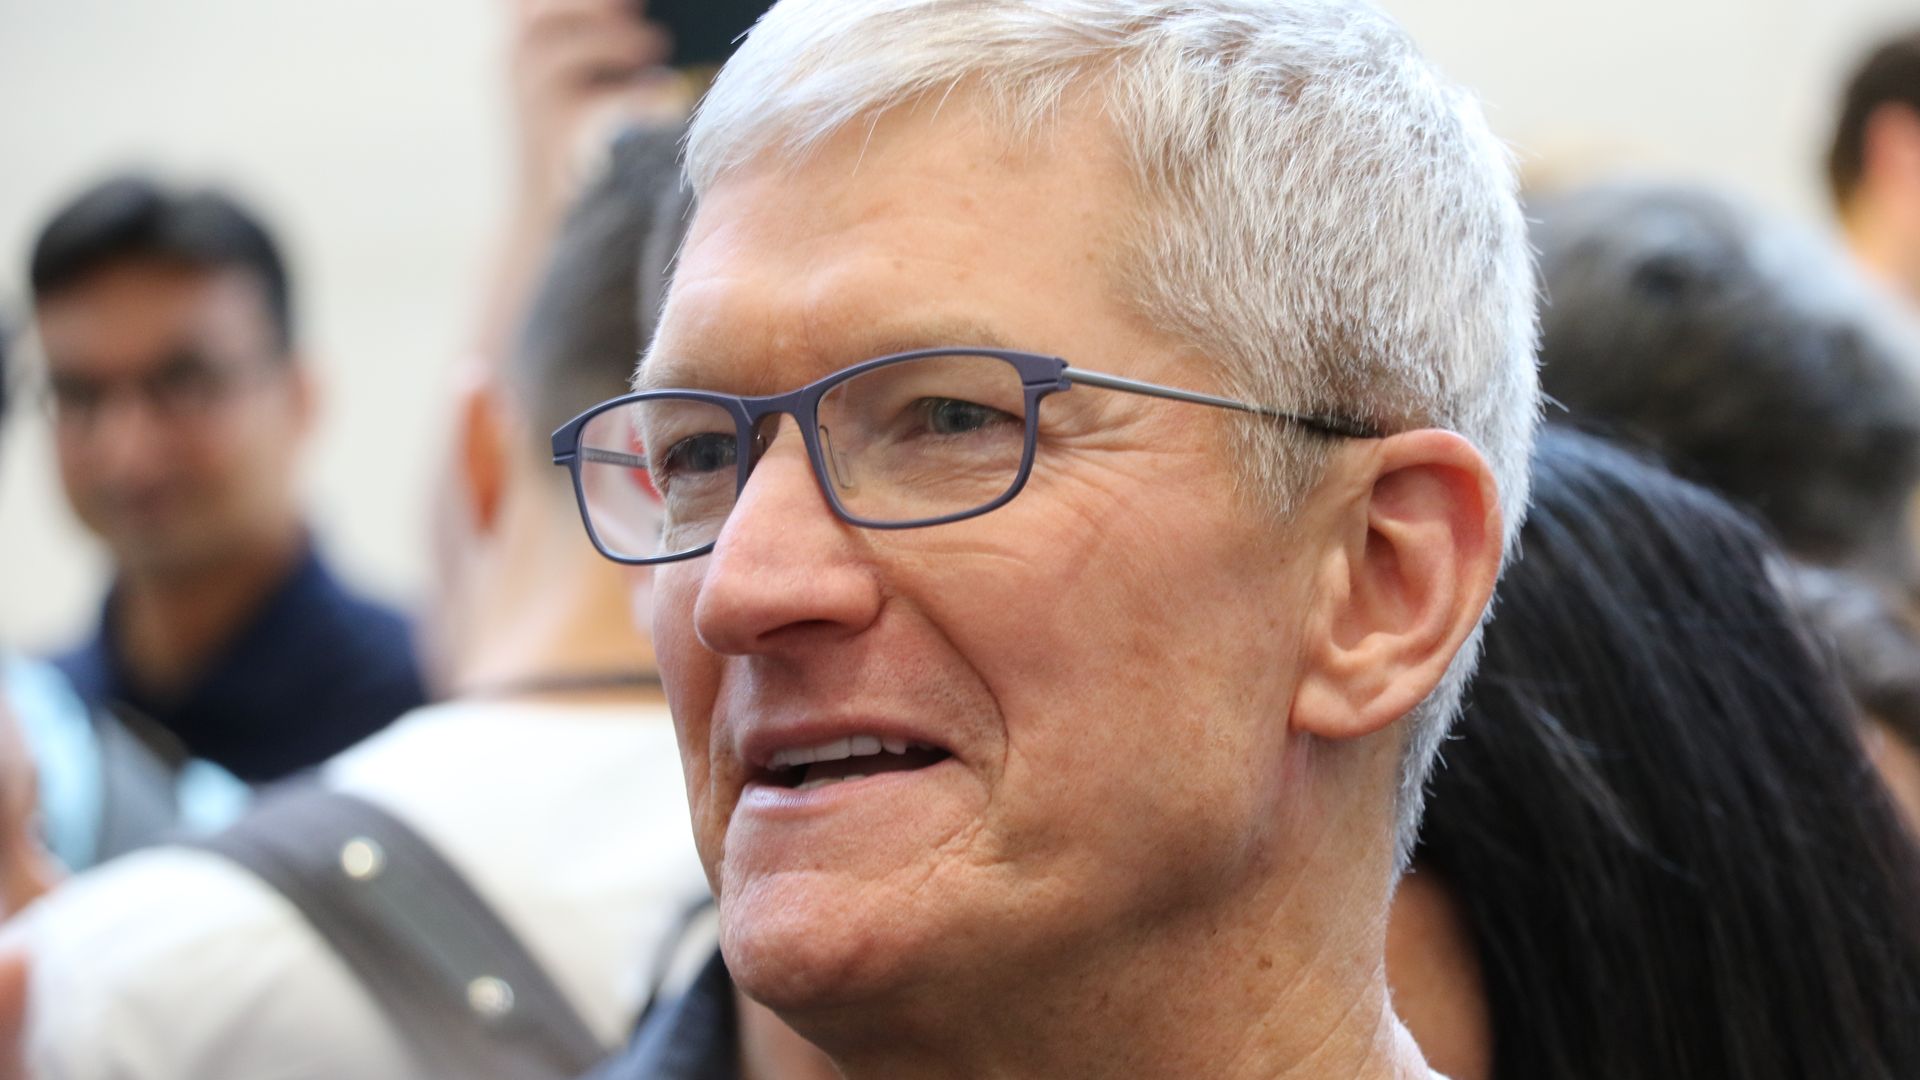 Apple's Tim Cook smiling